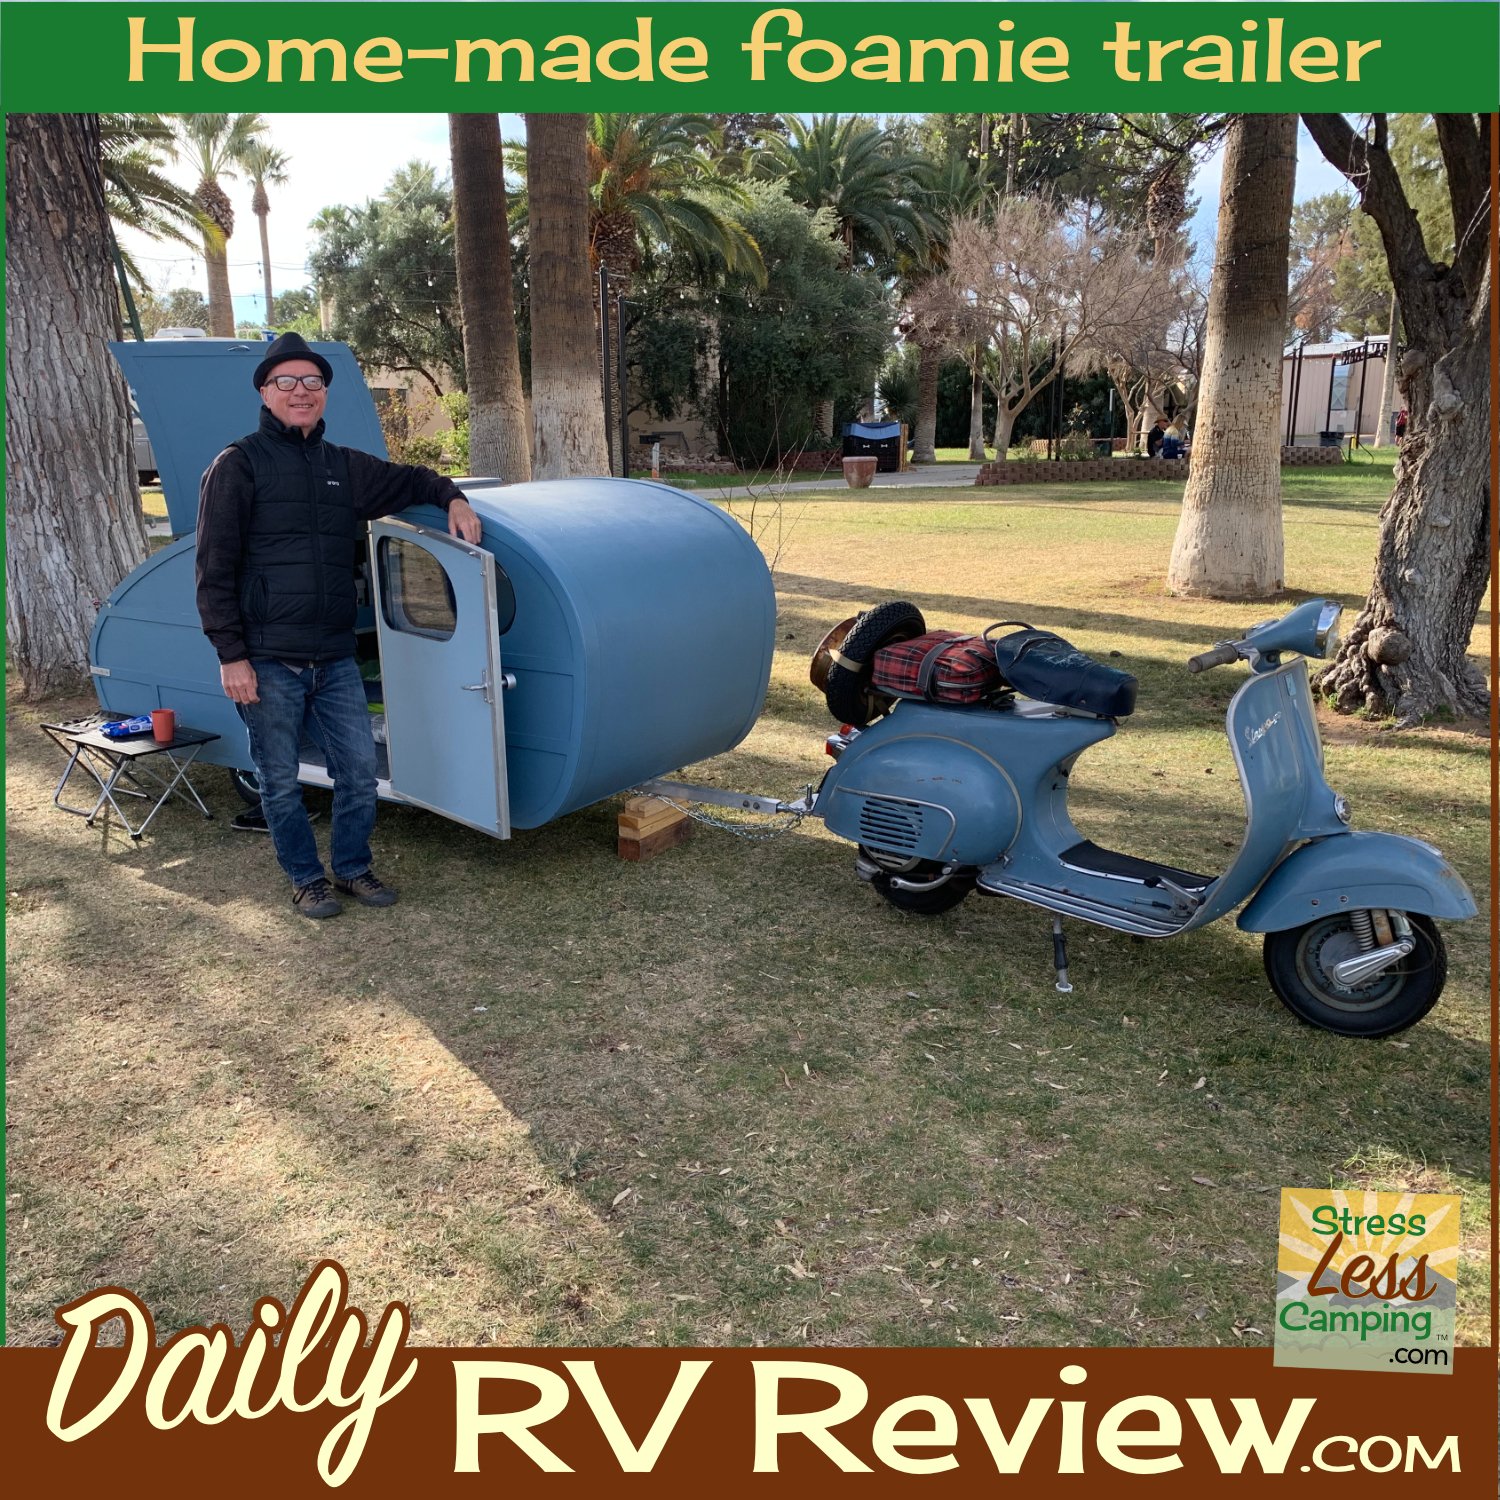 A home-made foamie trailer - towed by a Vespa!